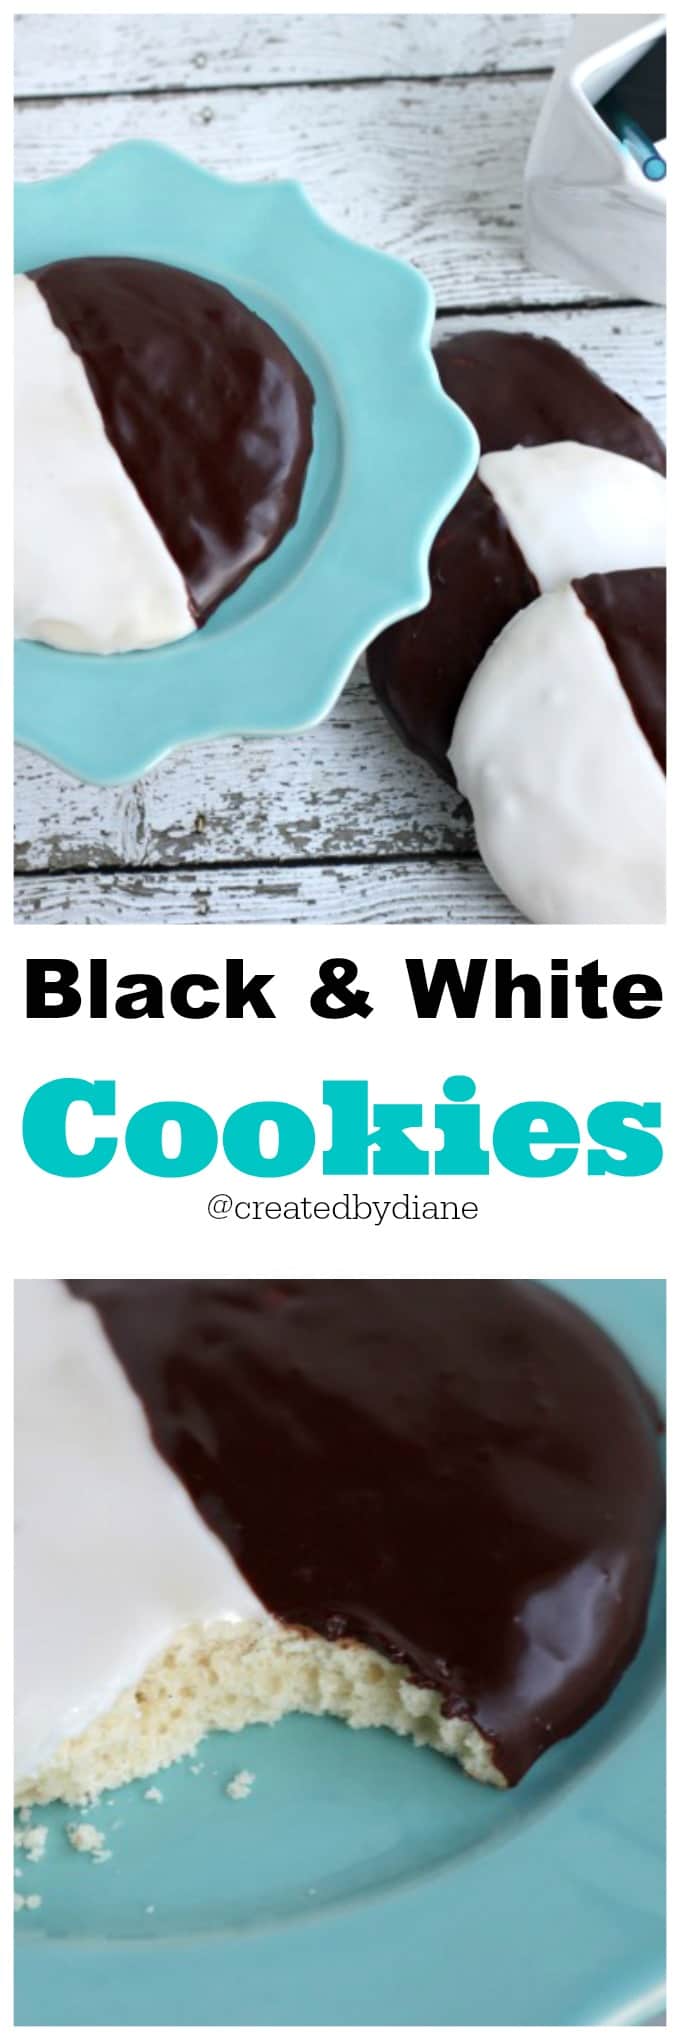 Black and White Cookies @createdbydiane